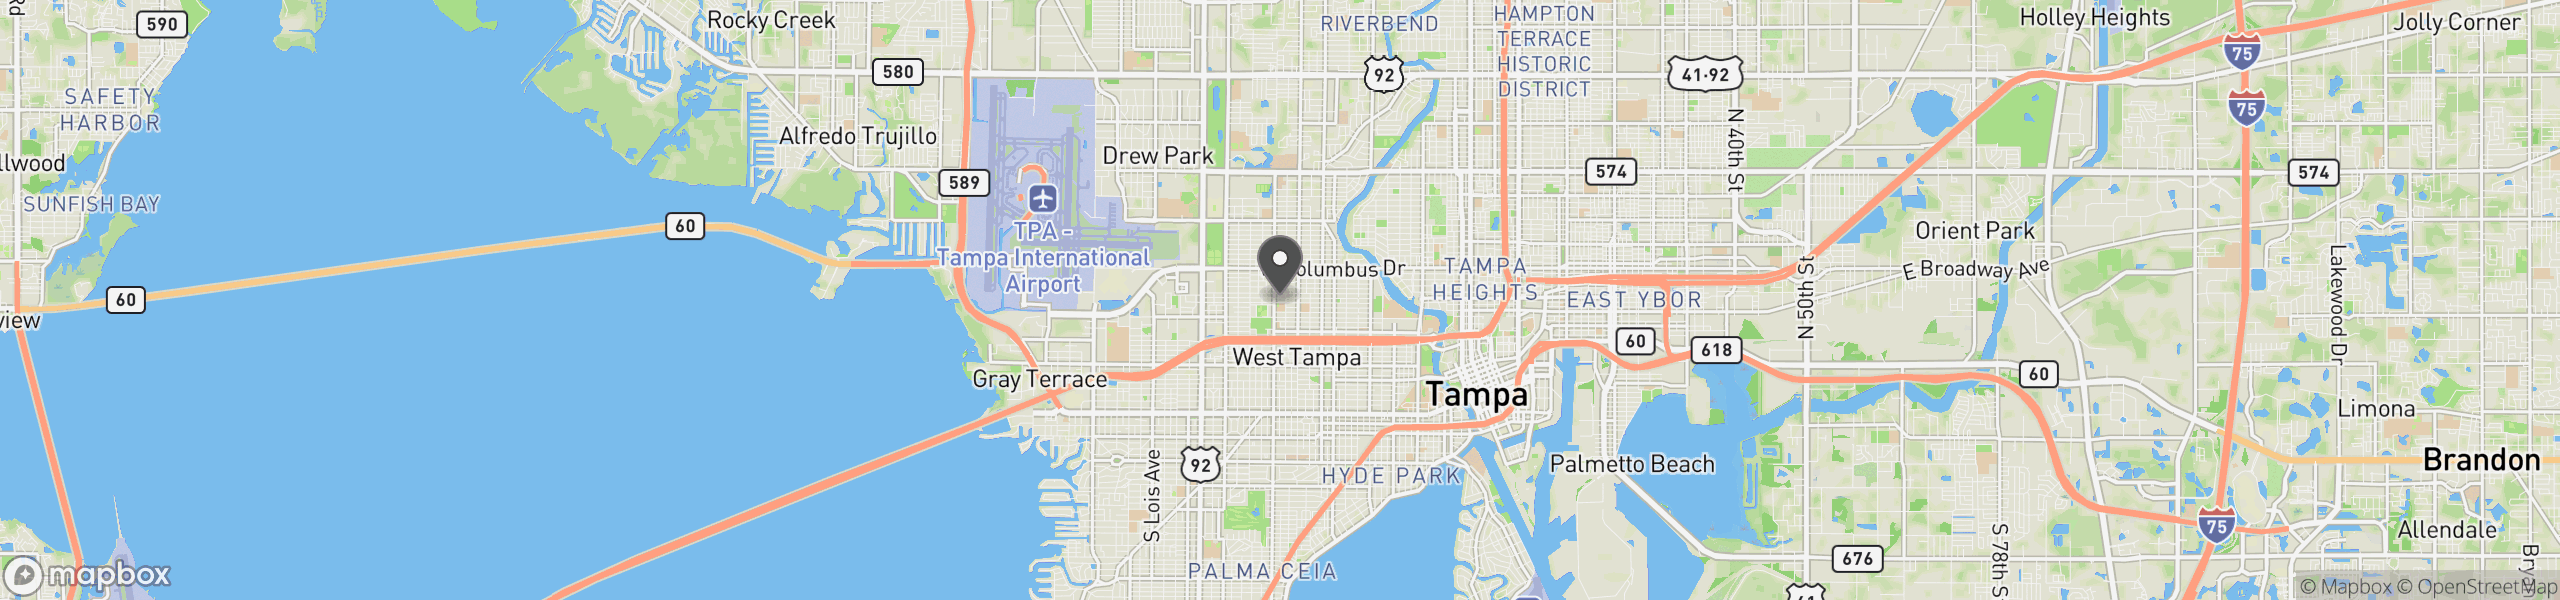 Tampa, FL 33607